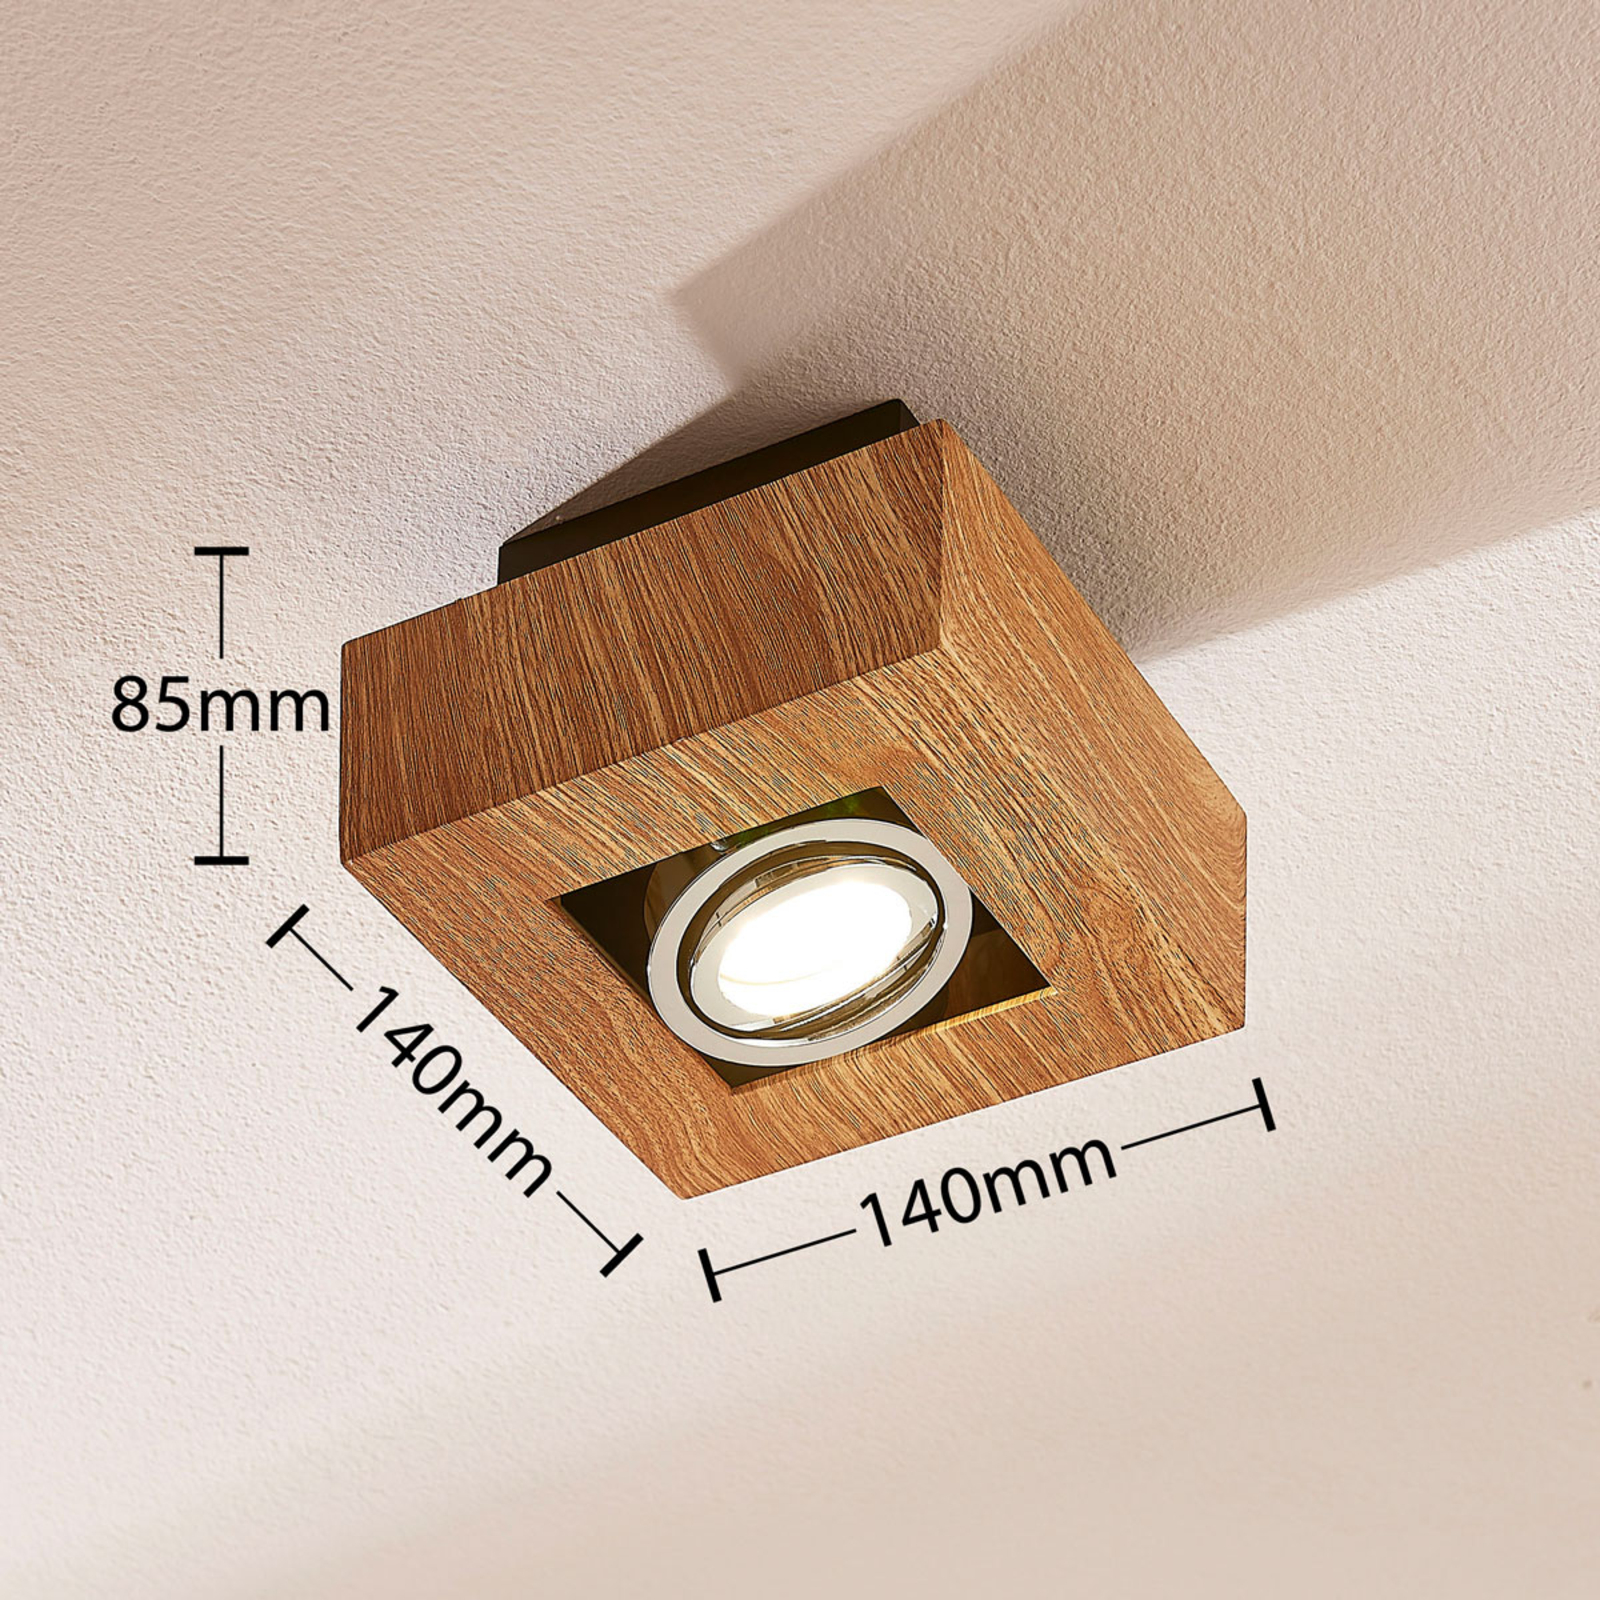 Vince ceiling light in wood look, 14 x 14 cm